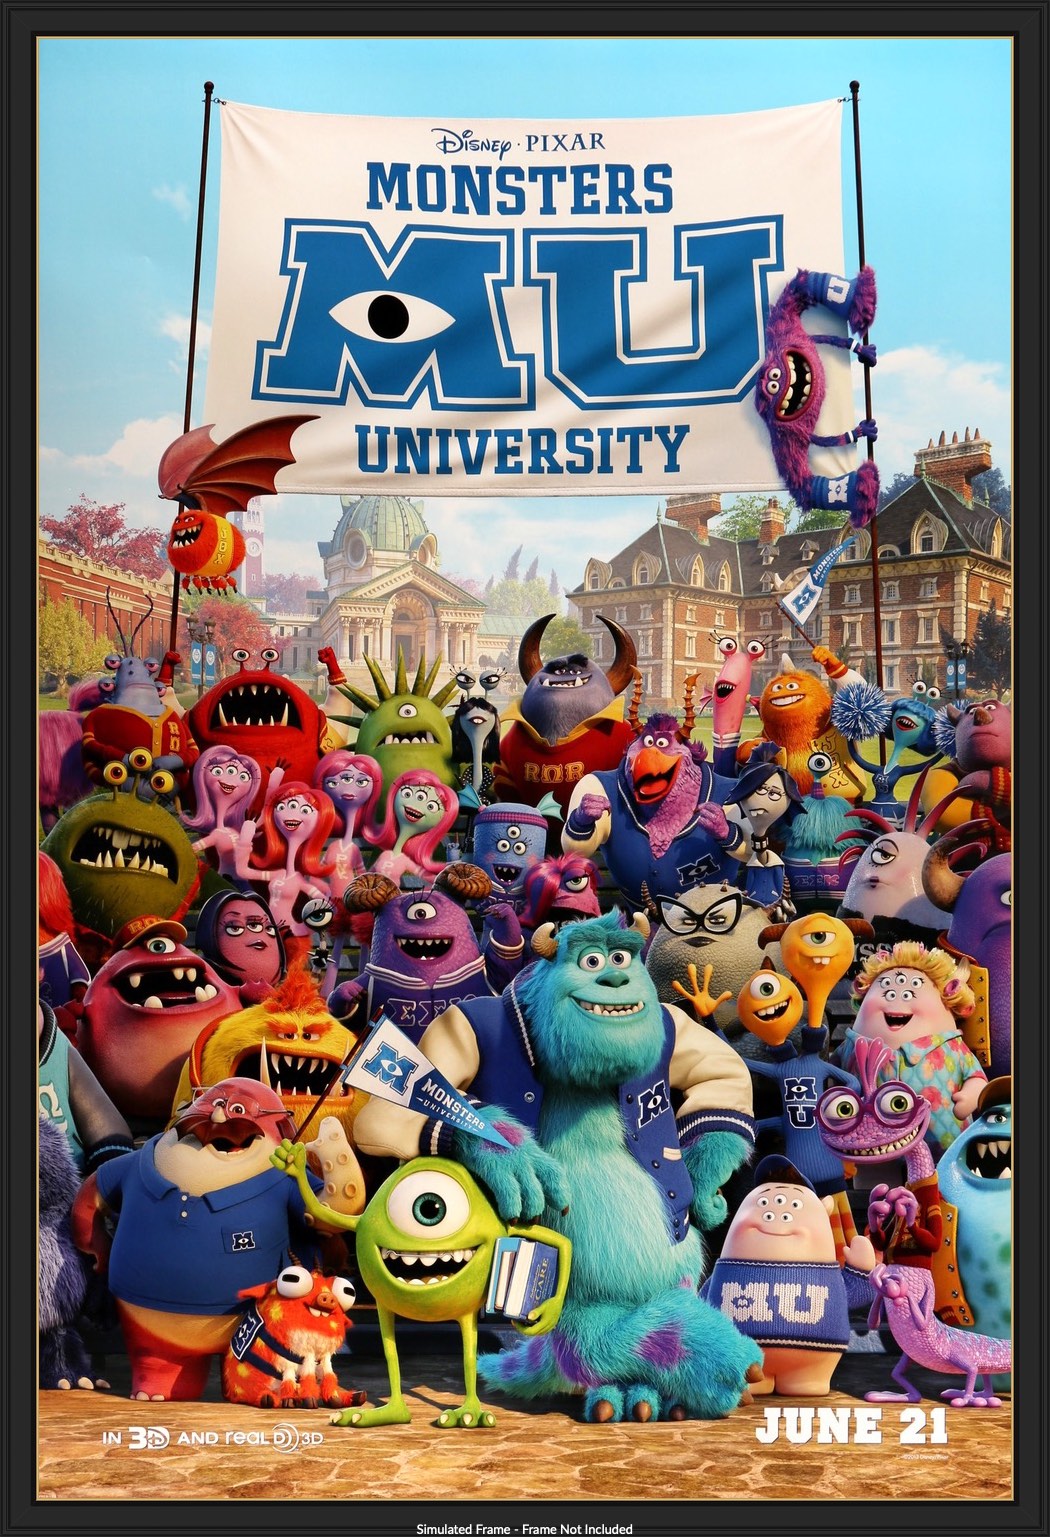 Monsters University (2013) original movie poster for sale at Original Film Art